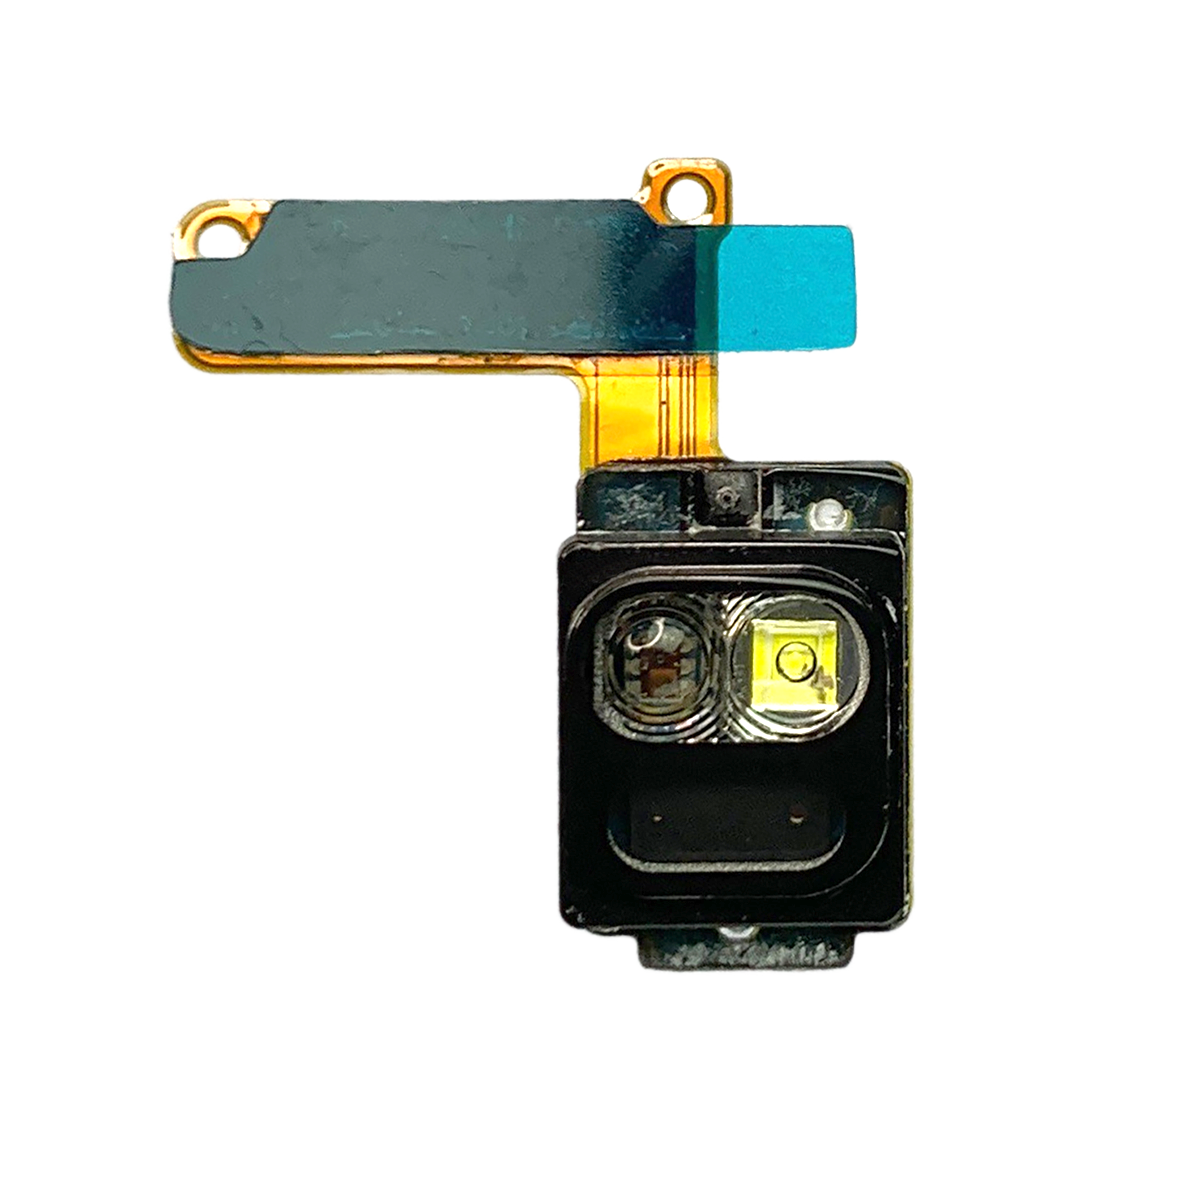 LG G8 ThinQ (G820) Front Camera